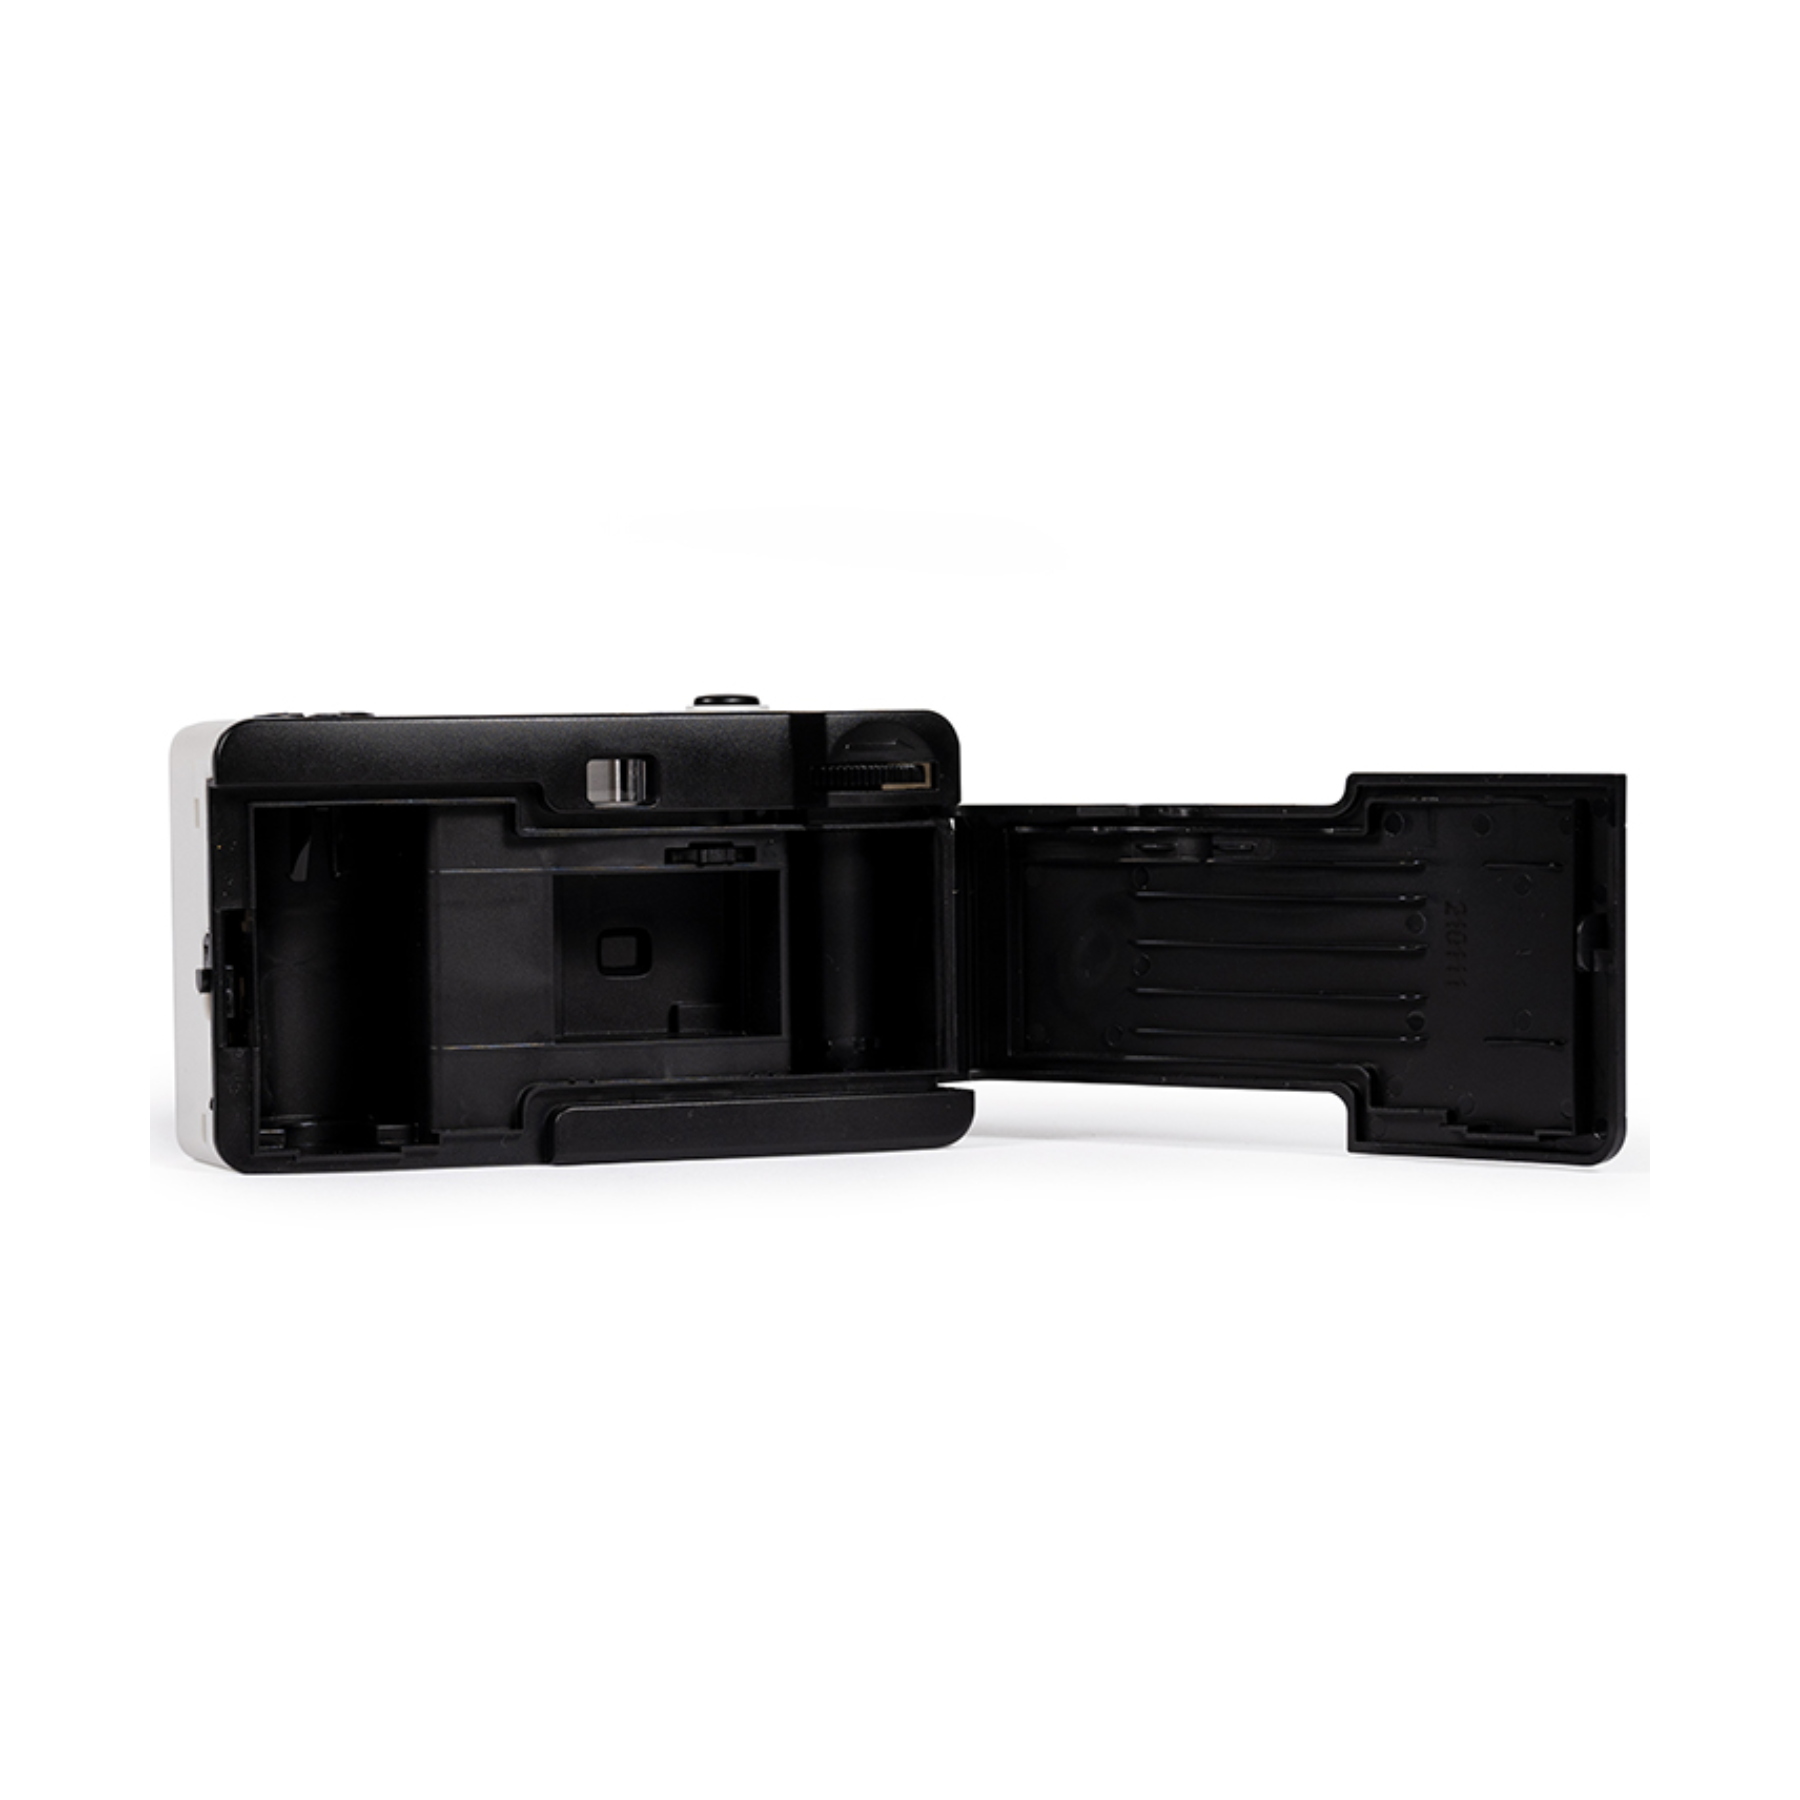 Buy ILFORD SPRITE 35-II reusable film camera - black at Topic Store